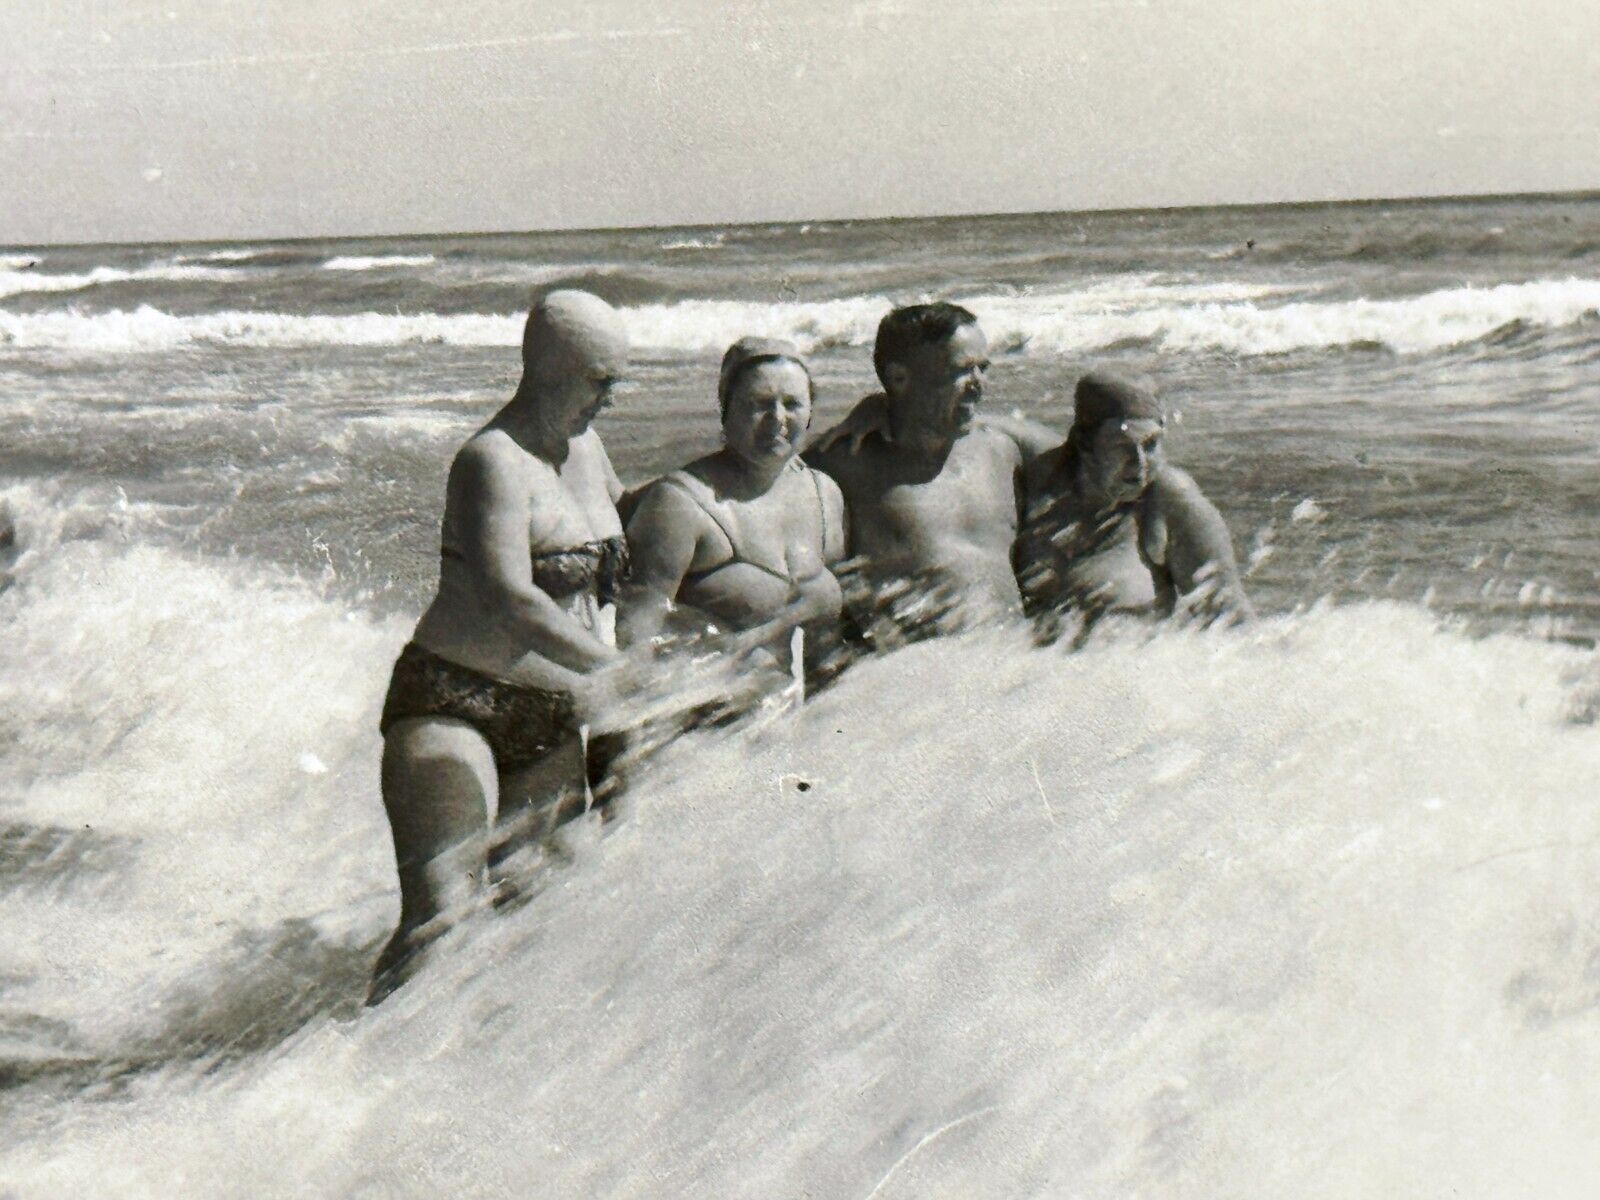 1960s Three Plump Women Bikini Shirtless Man big wave Sea Vintage Photo Snapshot